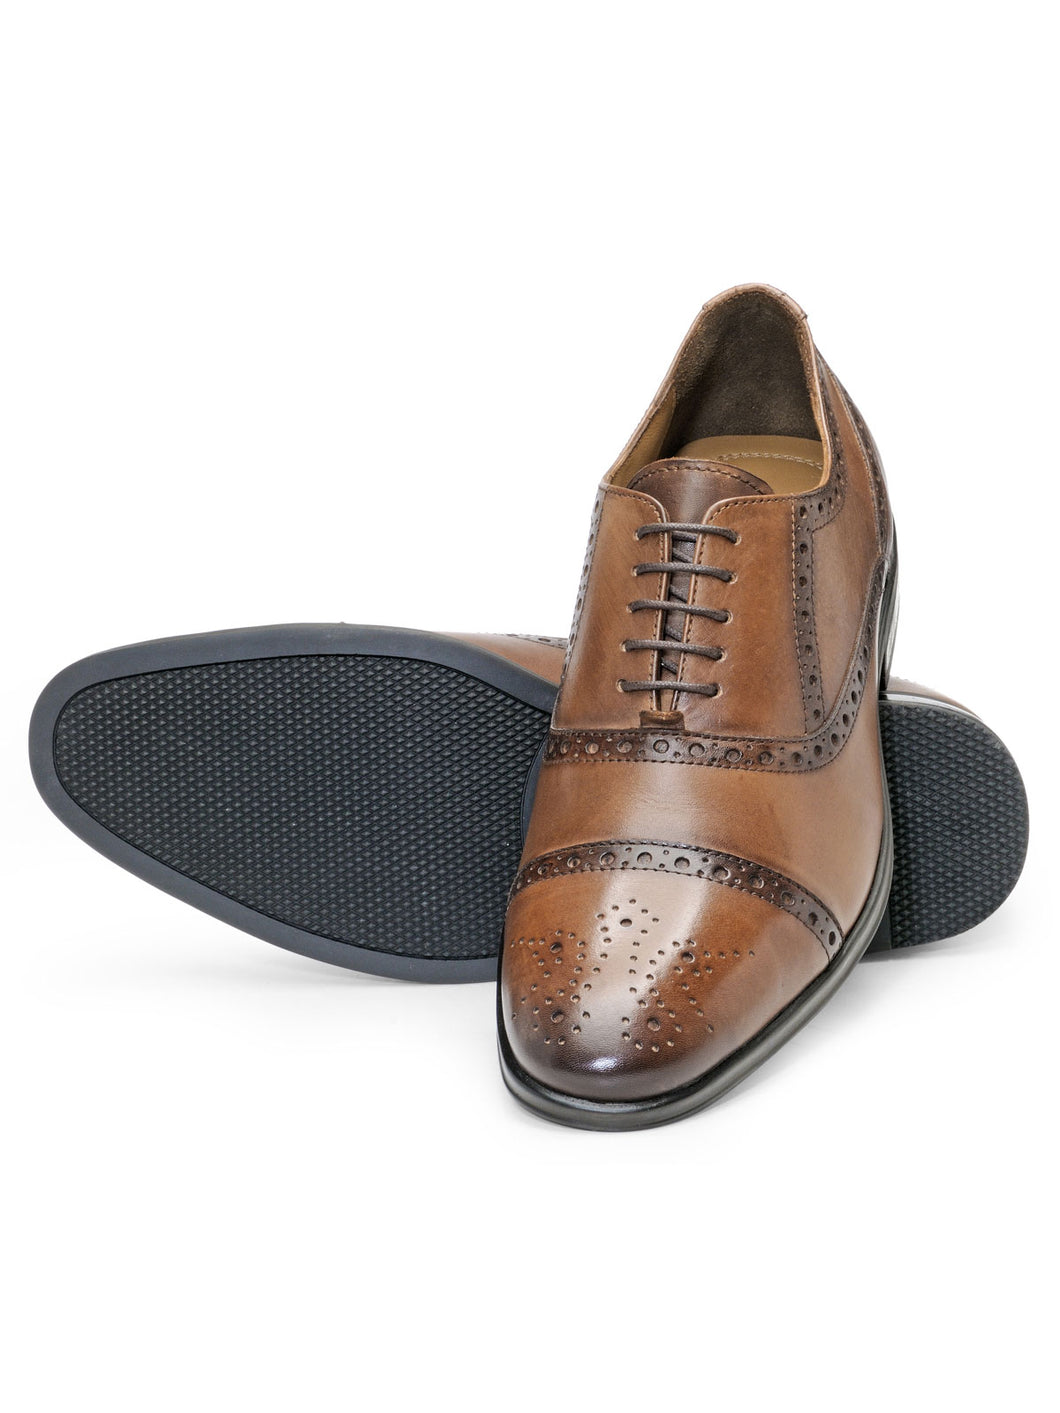 Teakwood Leather Men's Wood Oxford/Brogue Shoes